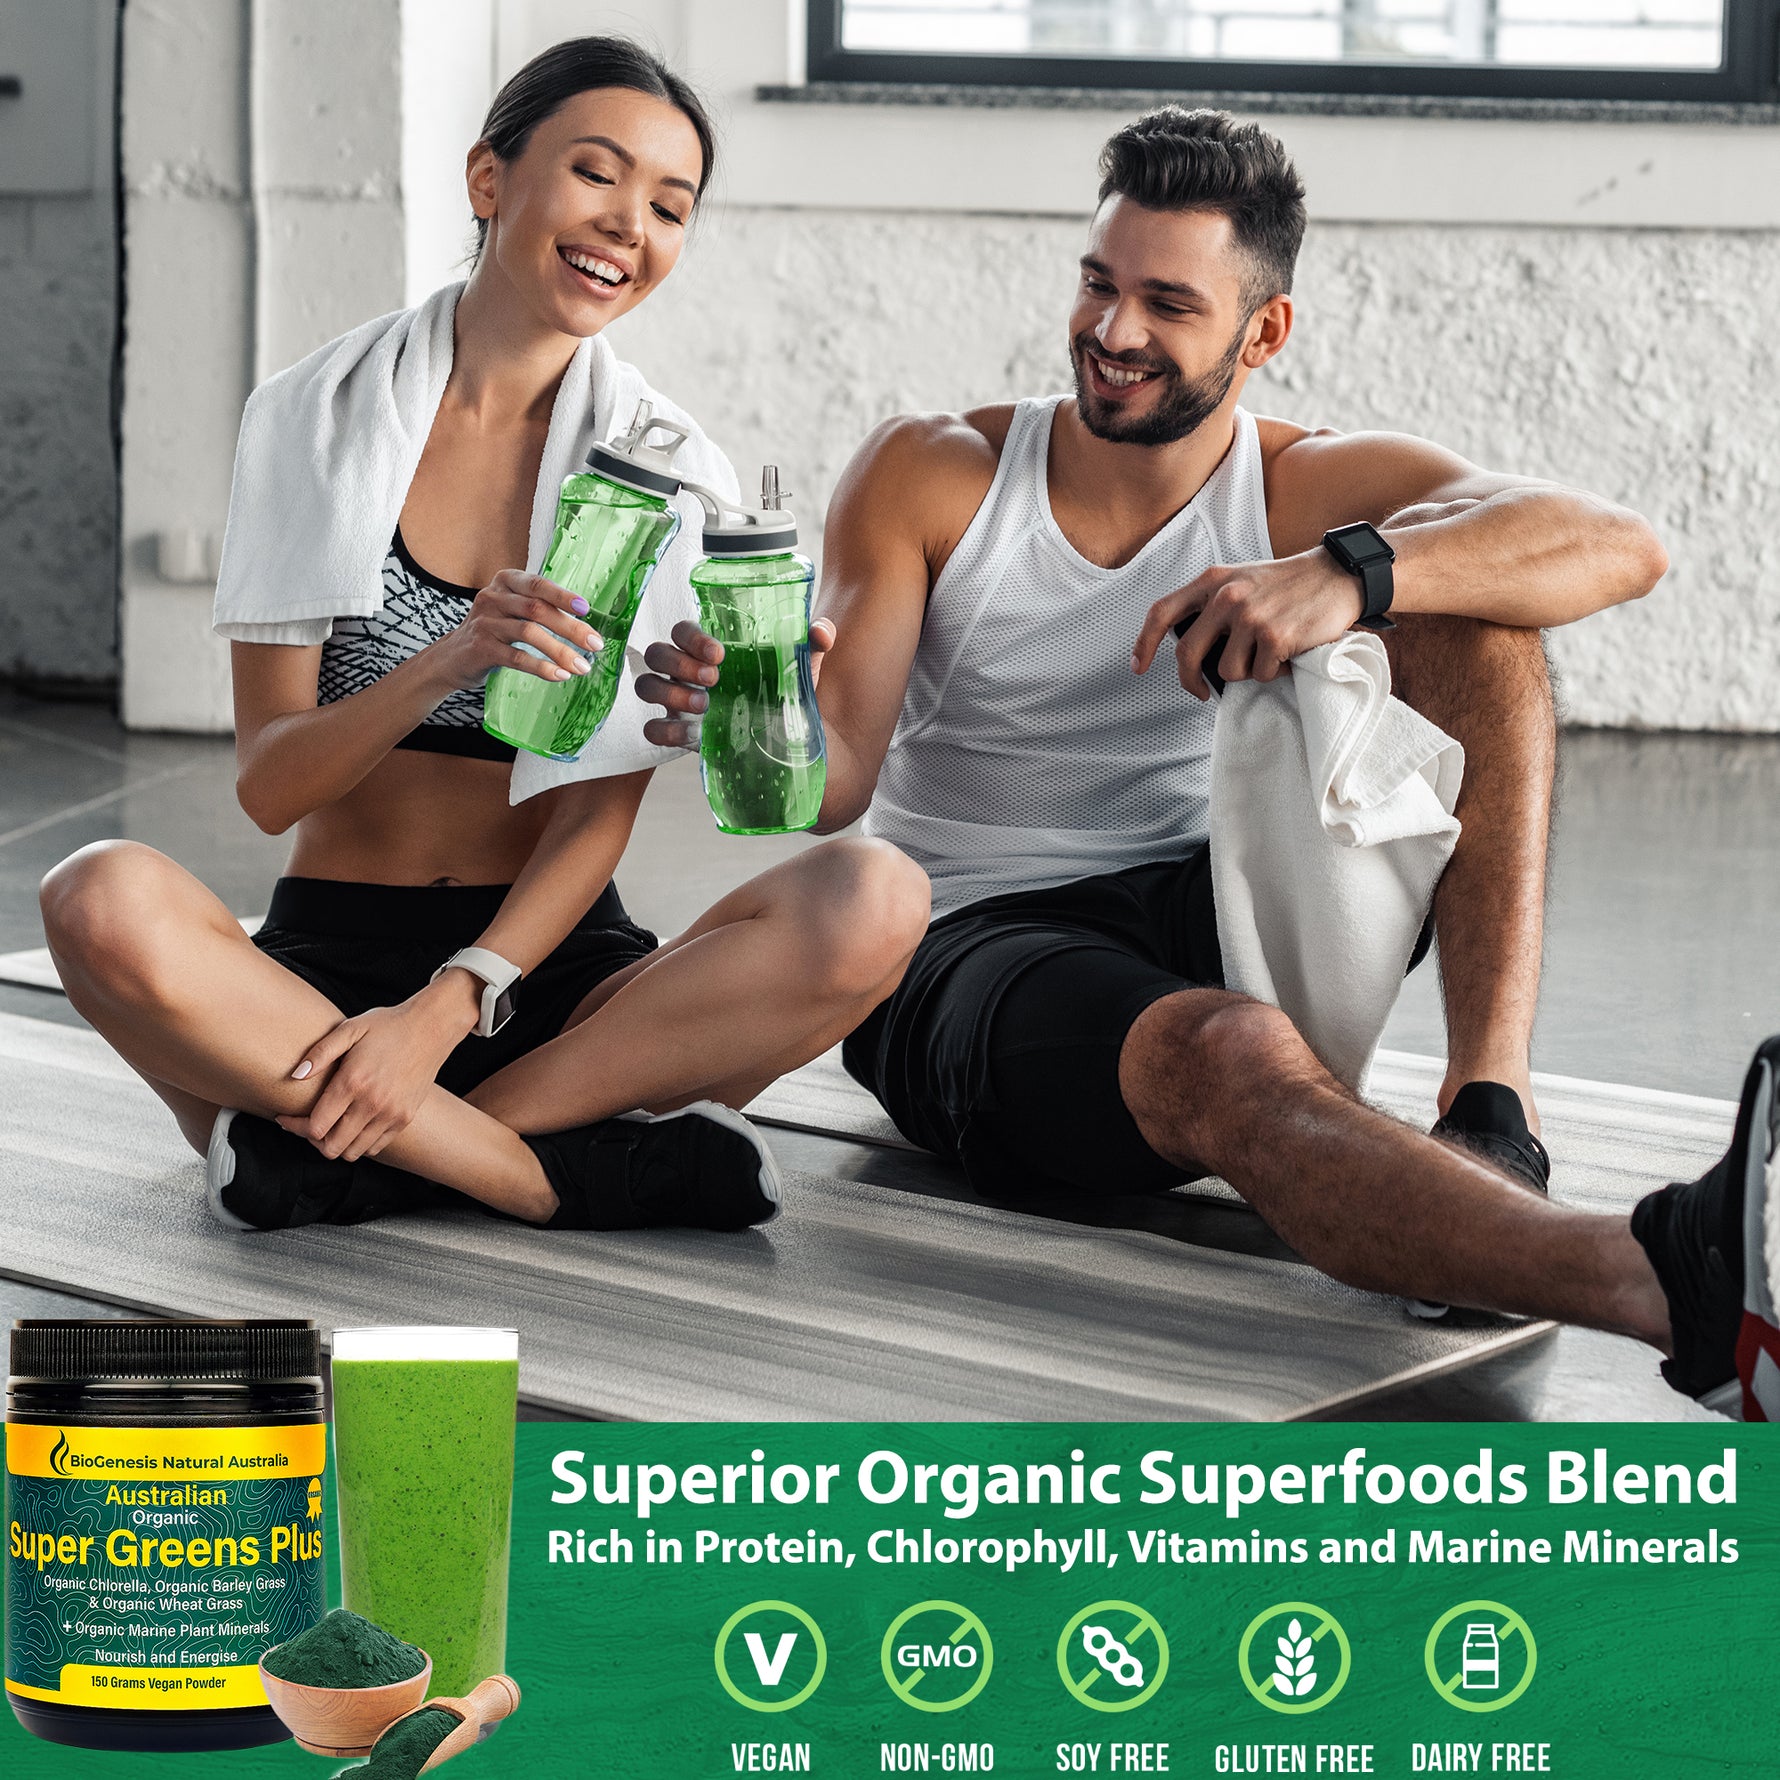 Superior organic superfoods blend: vegan, non GMO, soy free, gluten free, dairy free